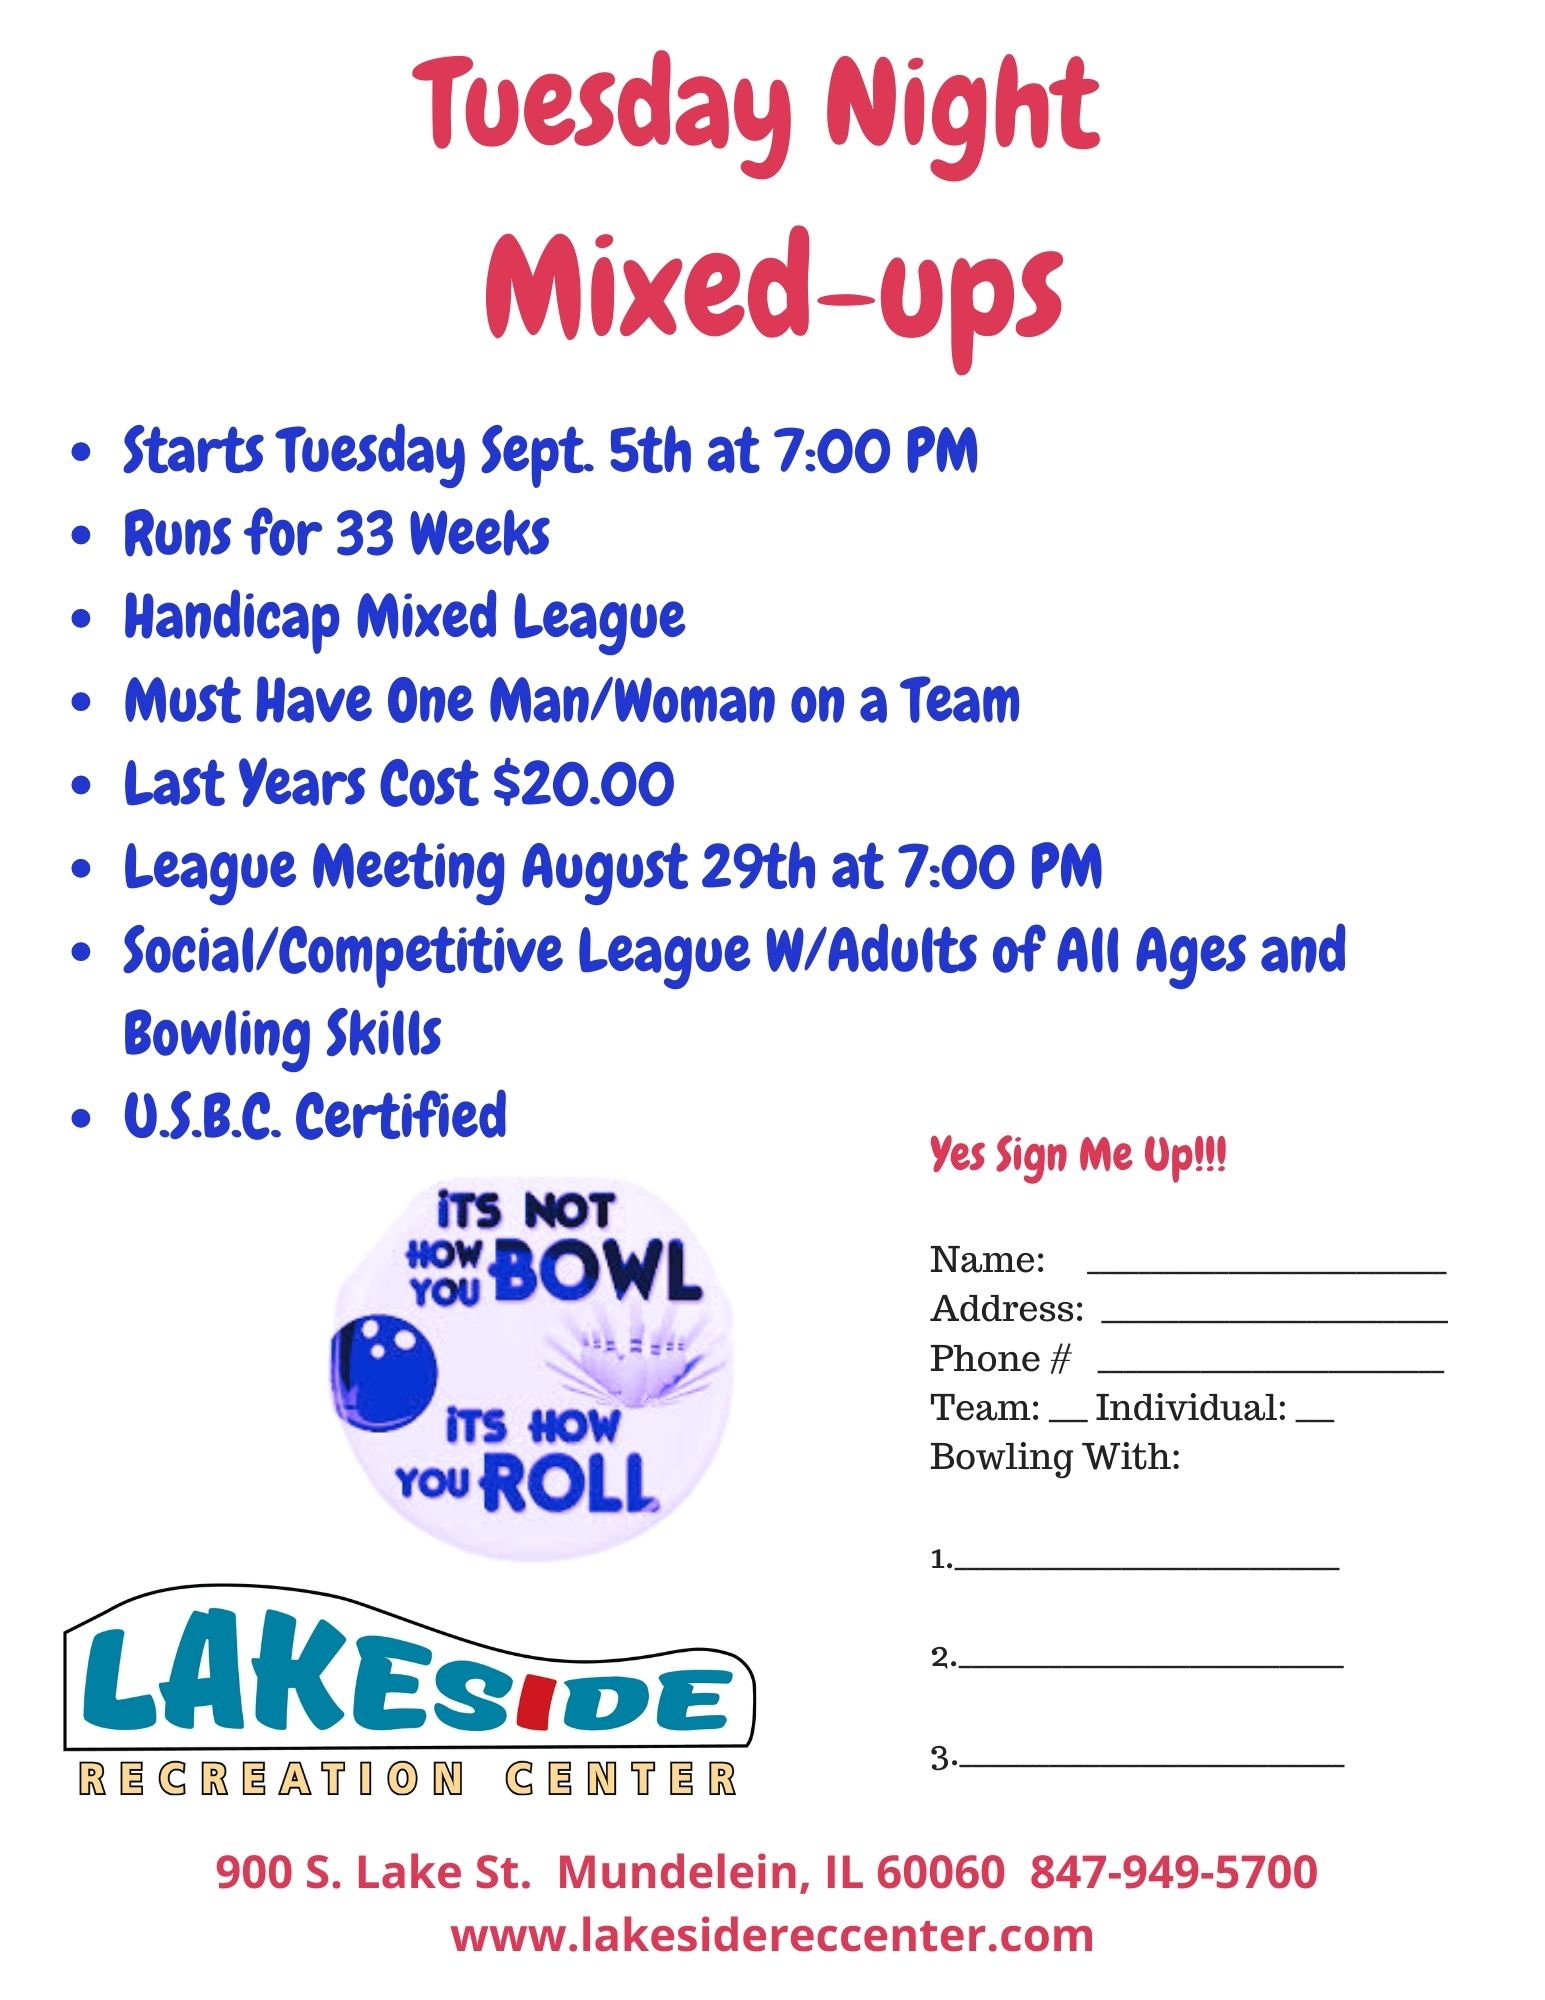 Tuesday Night Mixed Ups League at Lakeside Recreation Center